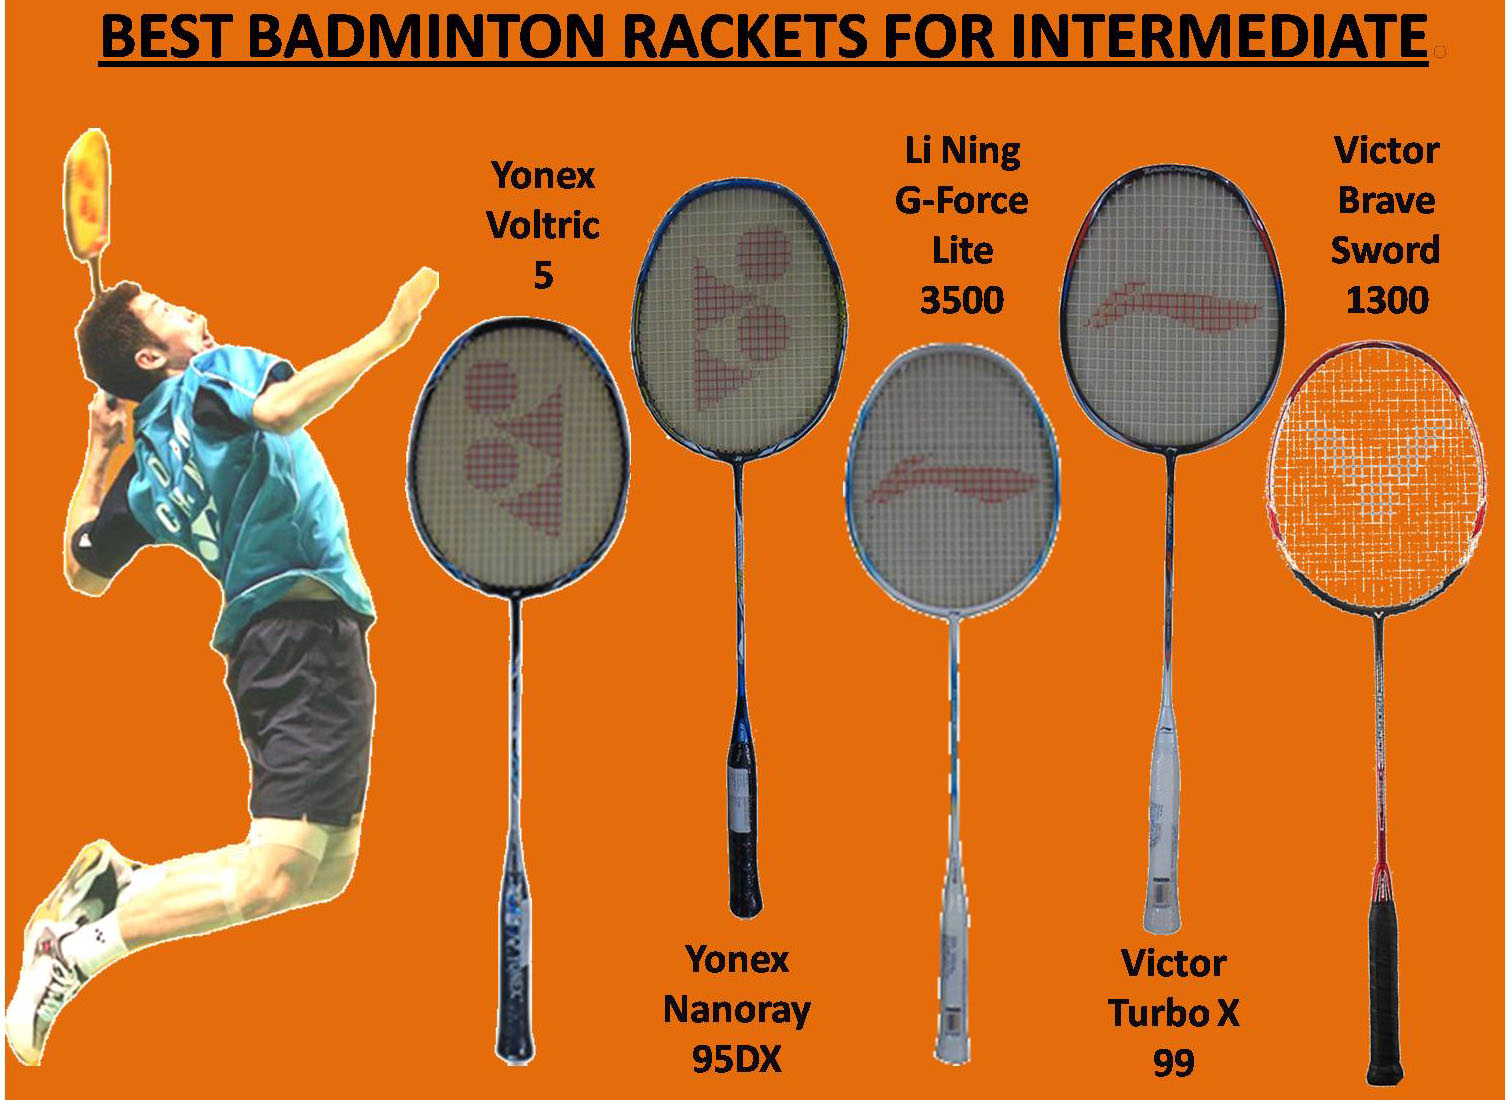 Best Badminton Rackets for